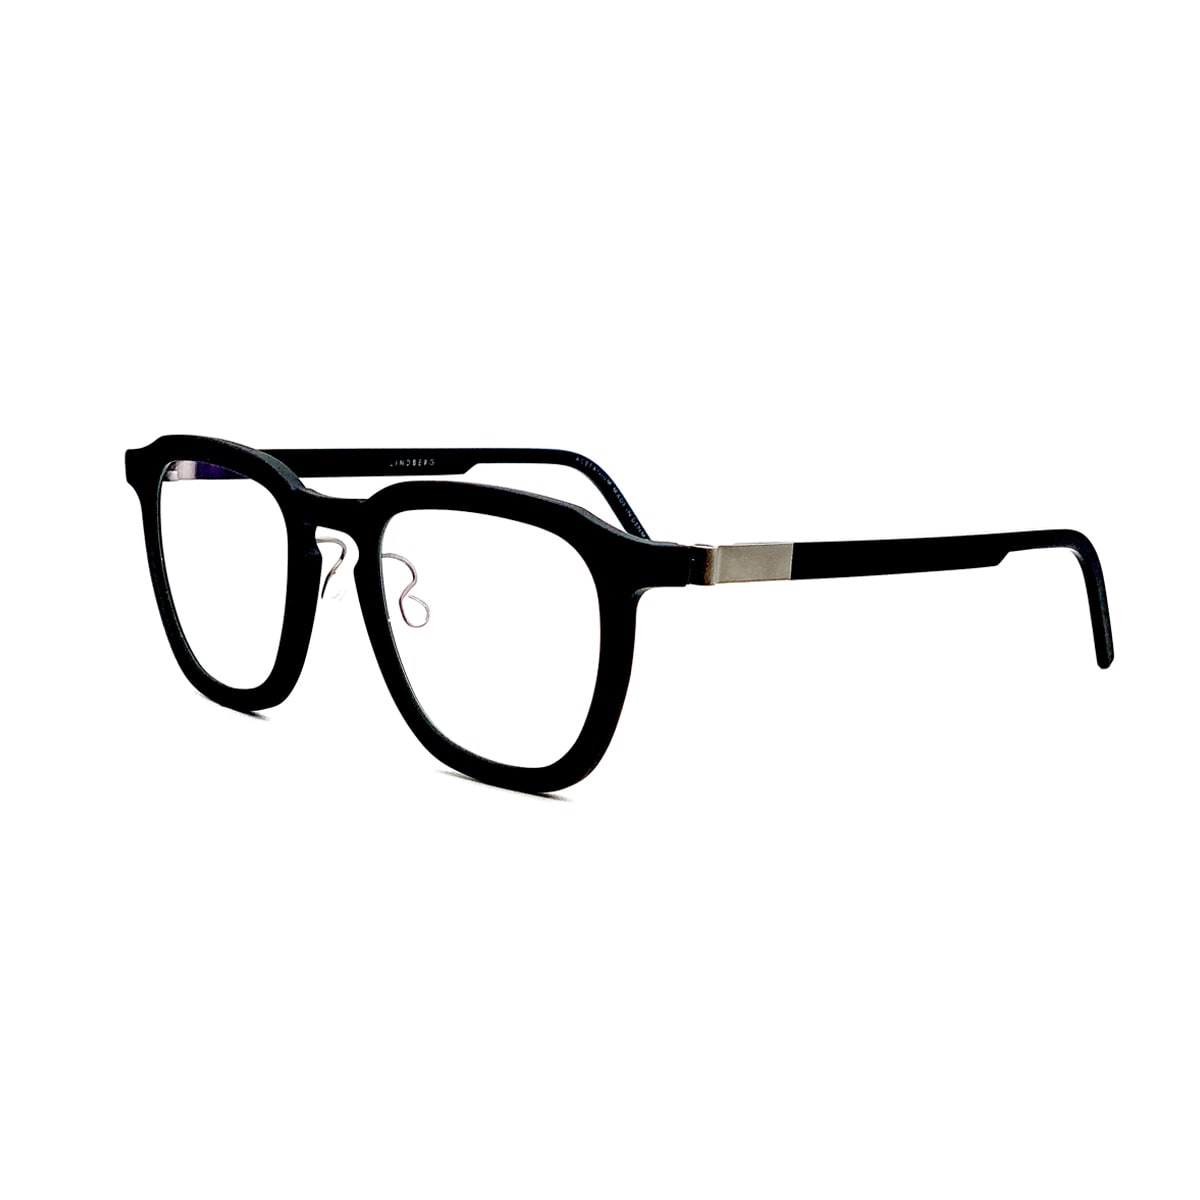 Lindberg Acetanium 1263 Glasses | ModeSens